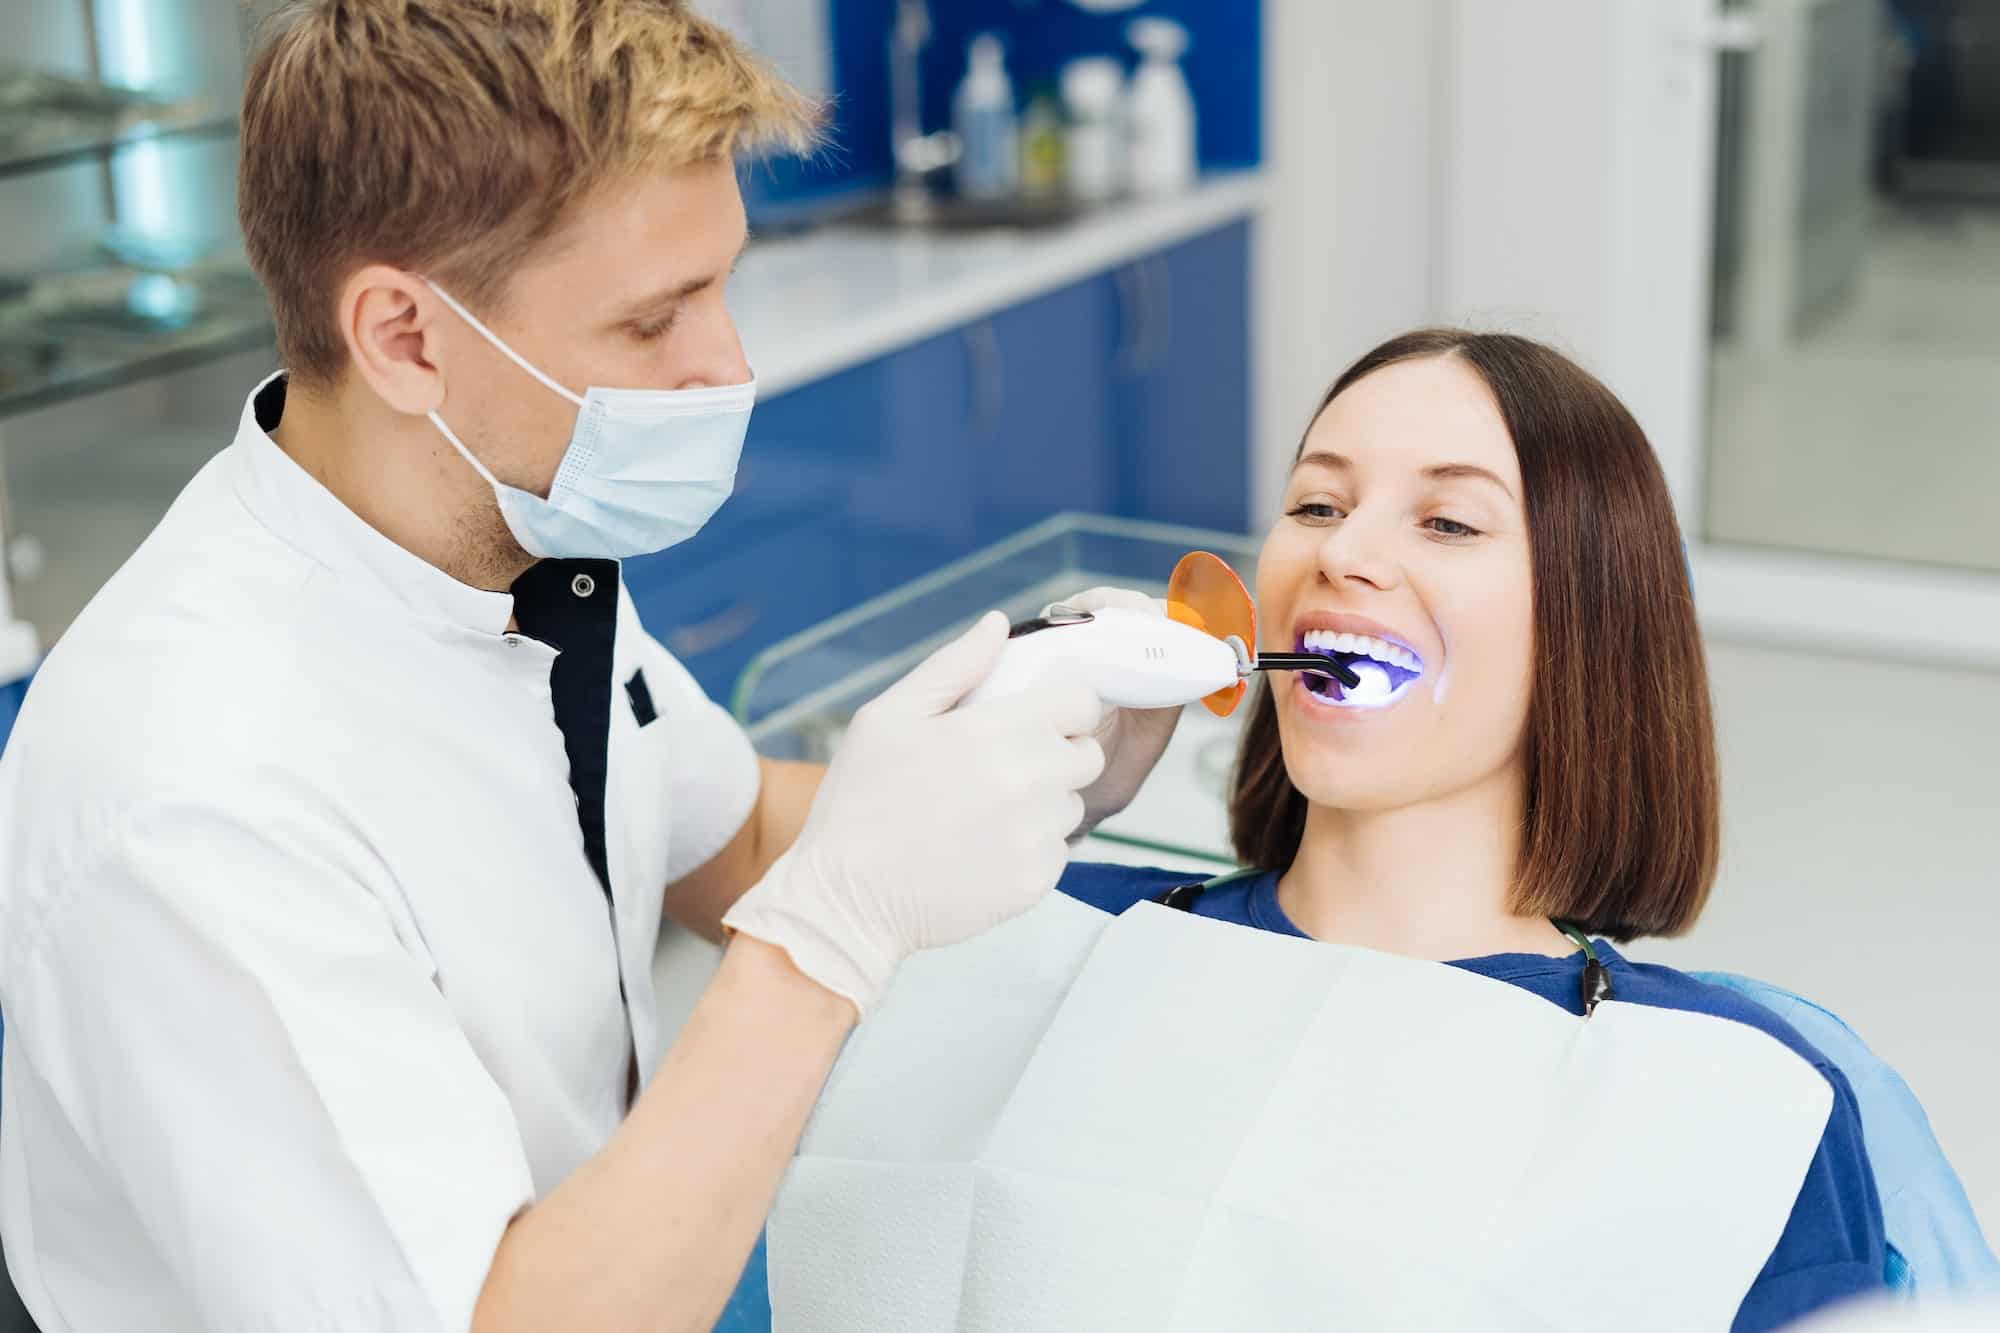 Whitening teeth procedure during visit at dentist.